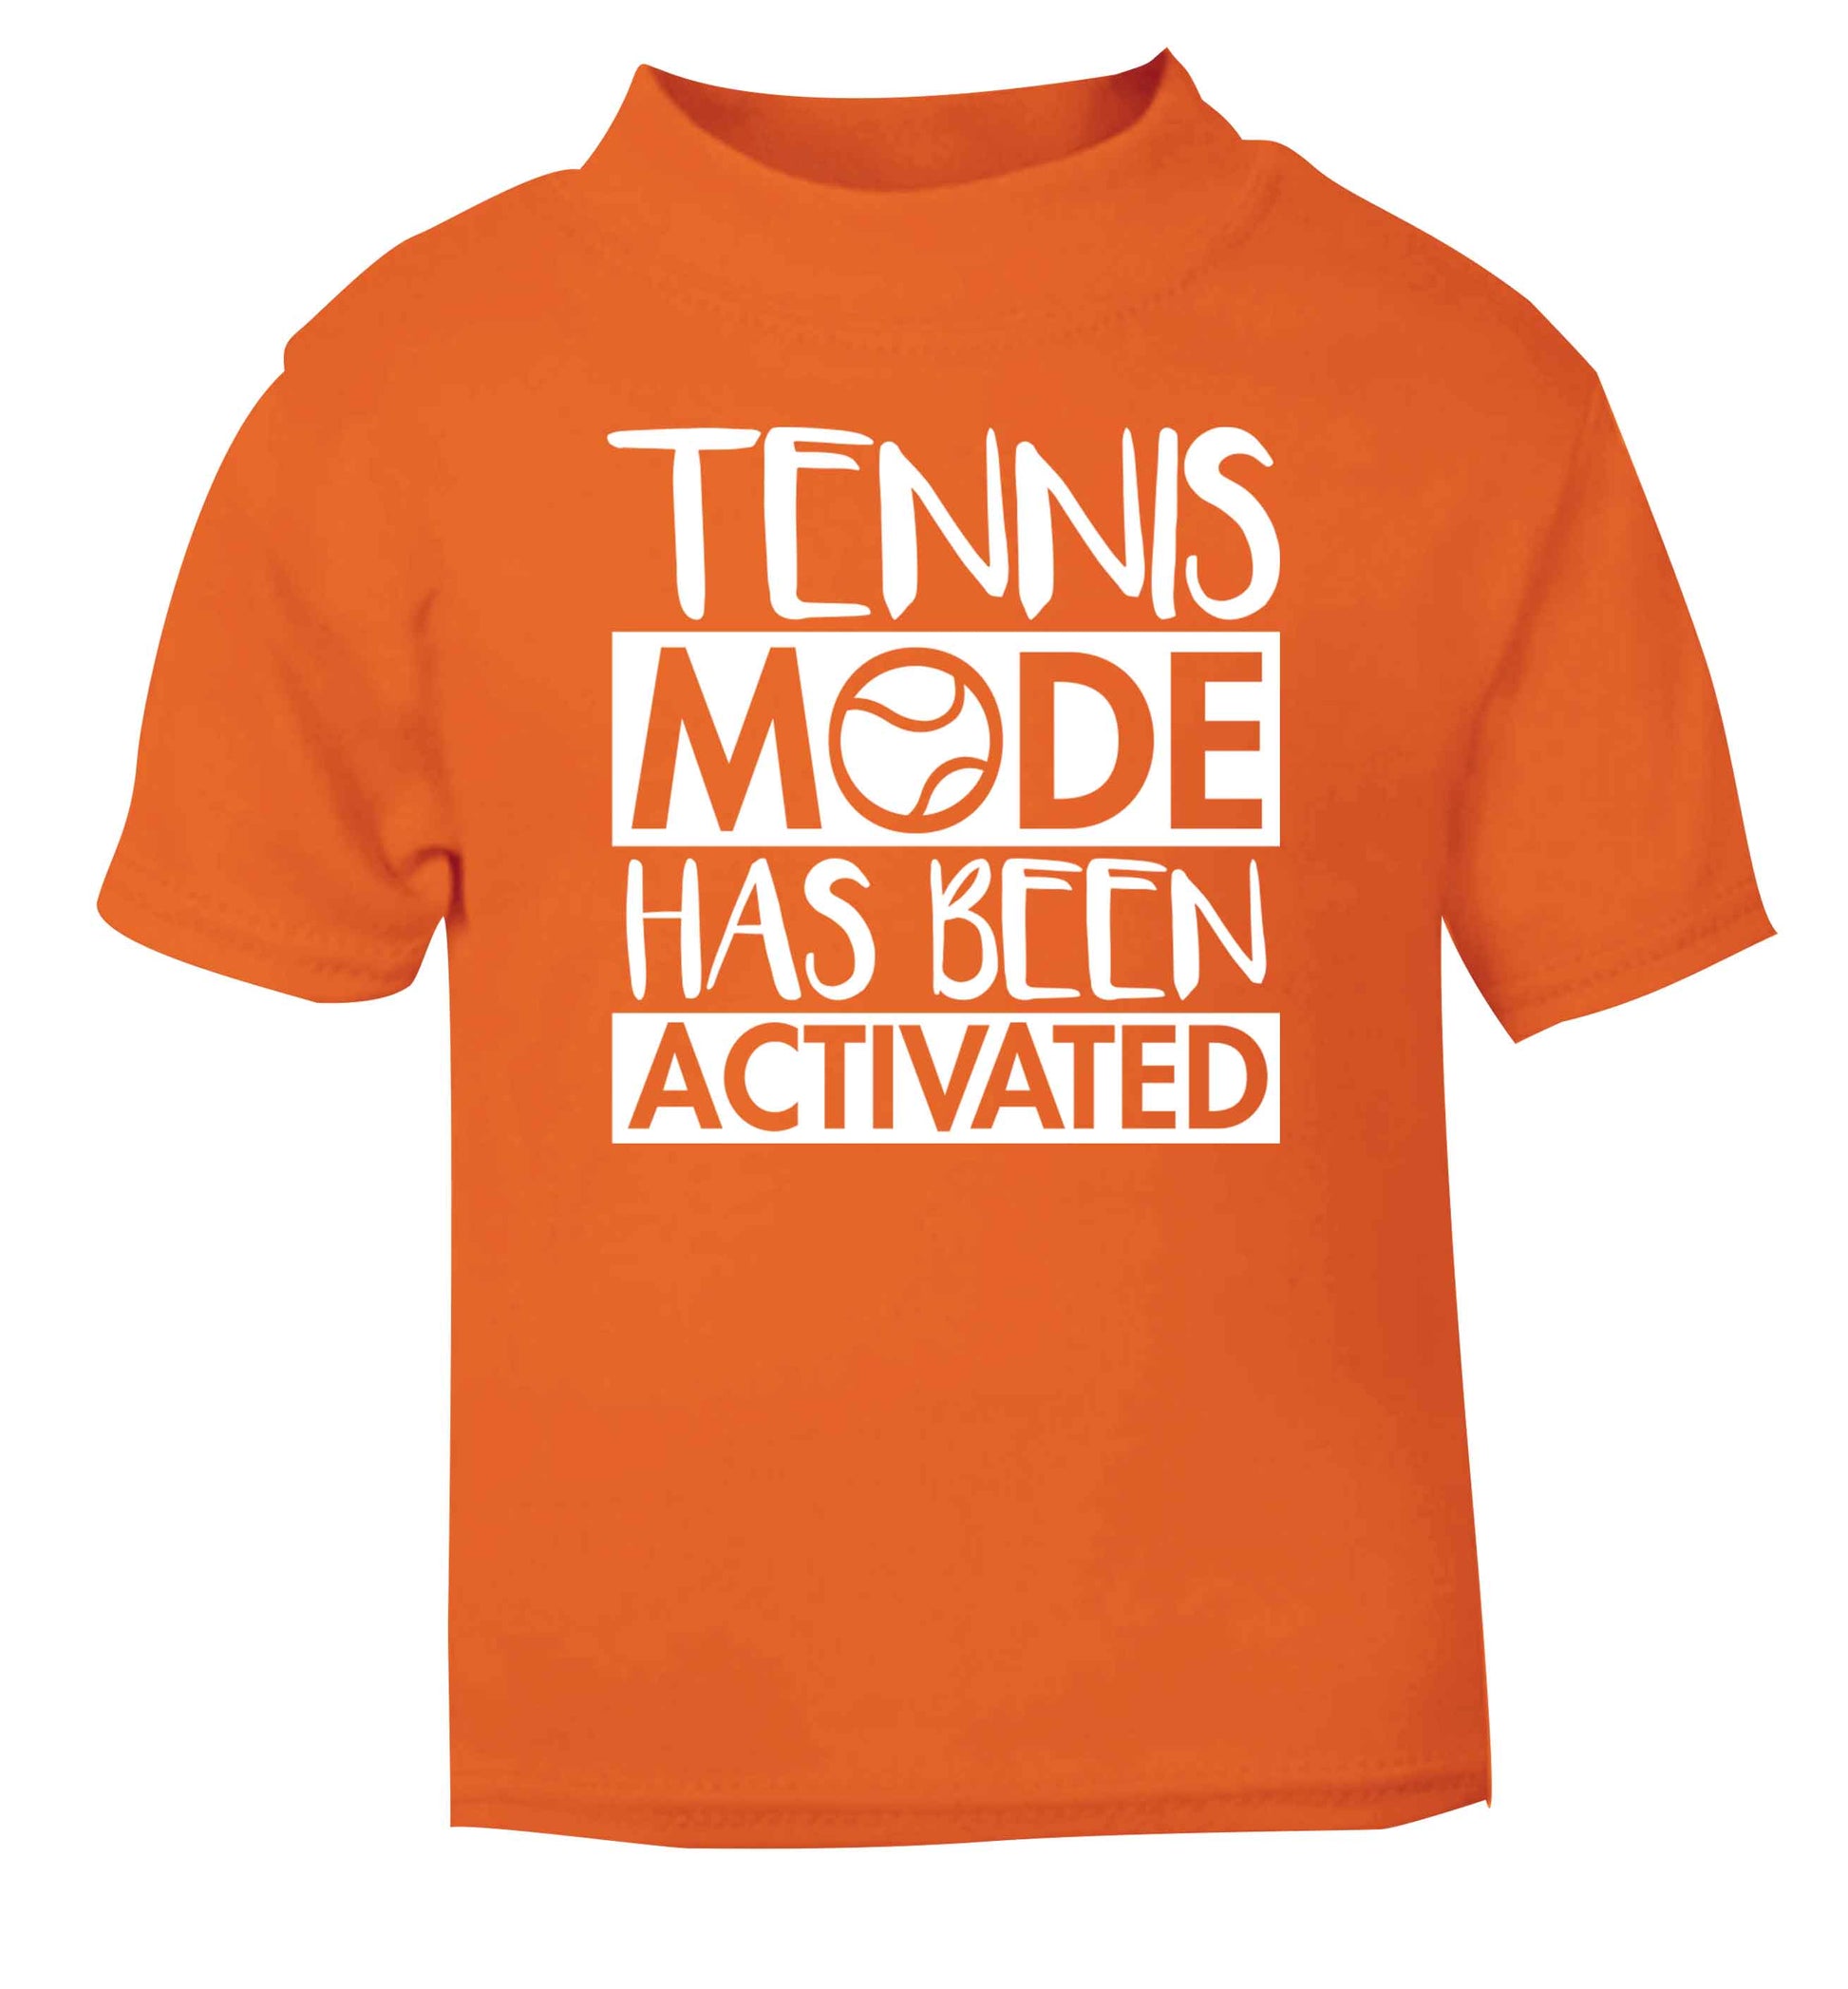 Tennis mode has been activated orange Baby Toddler Tshirt 2 Years